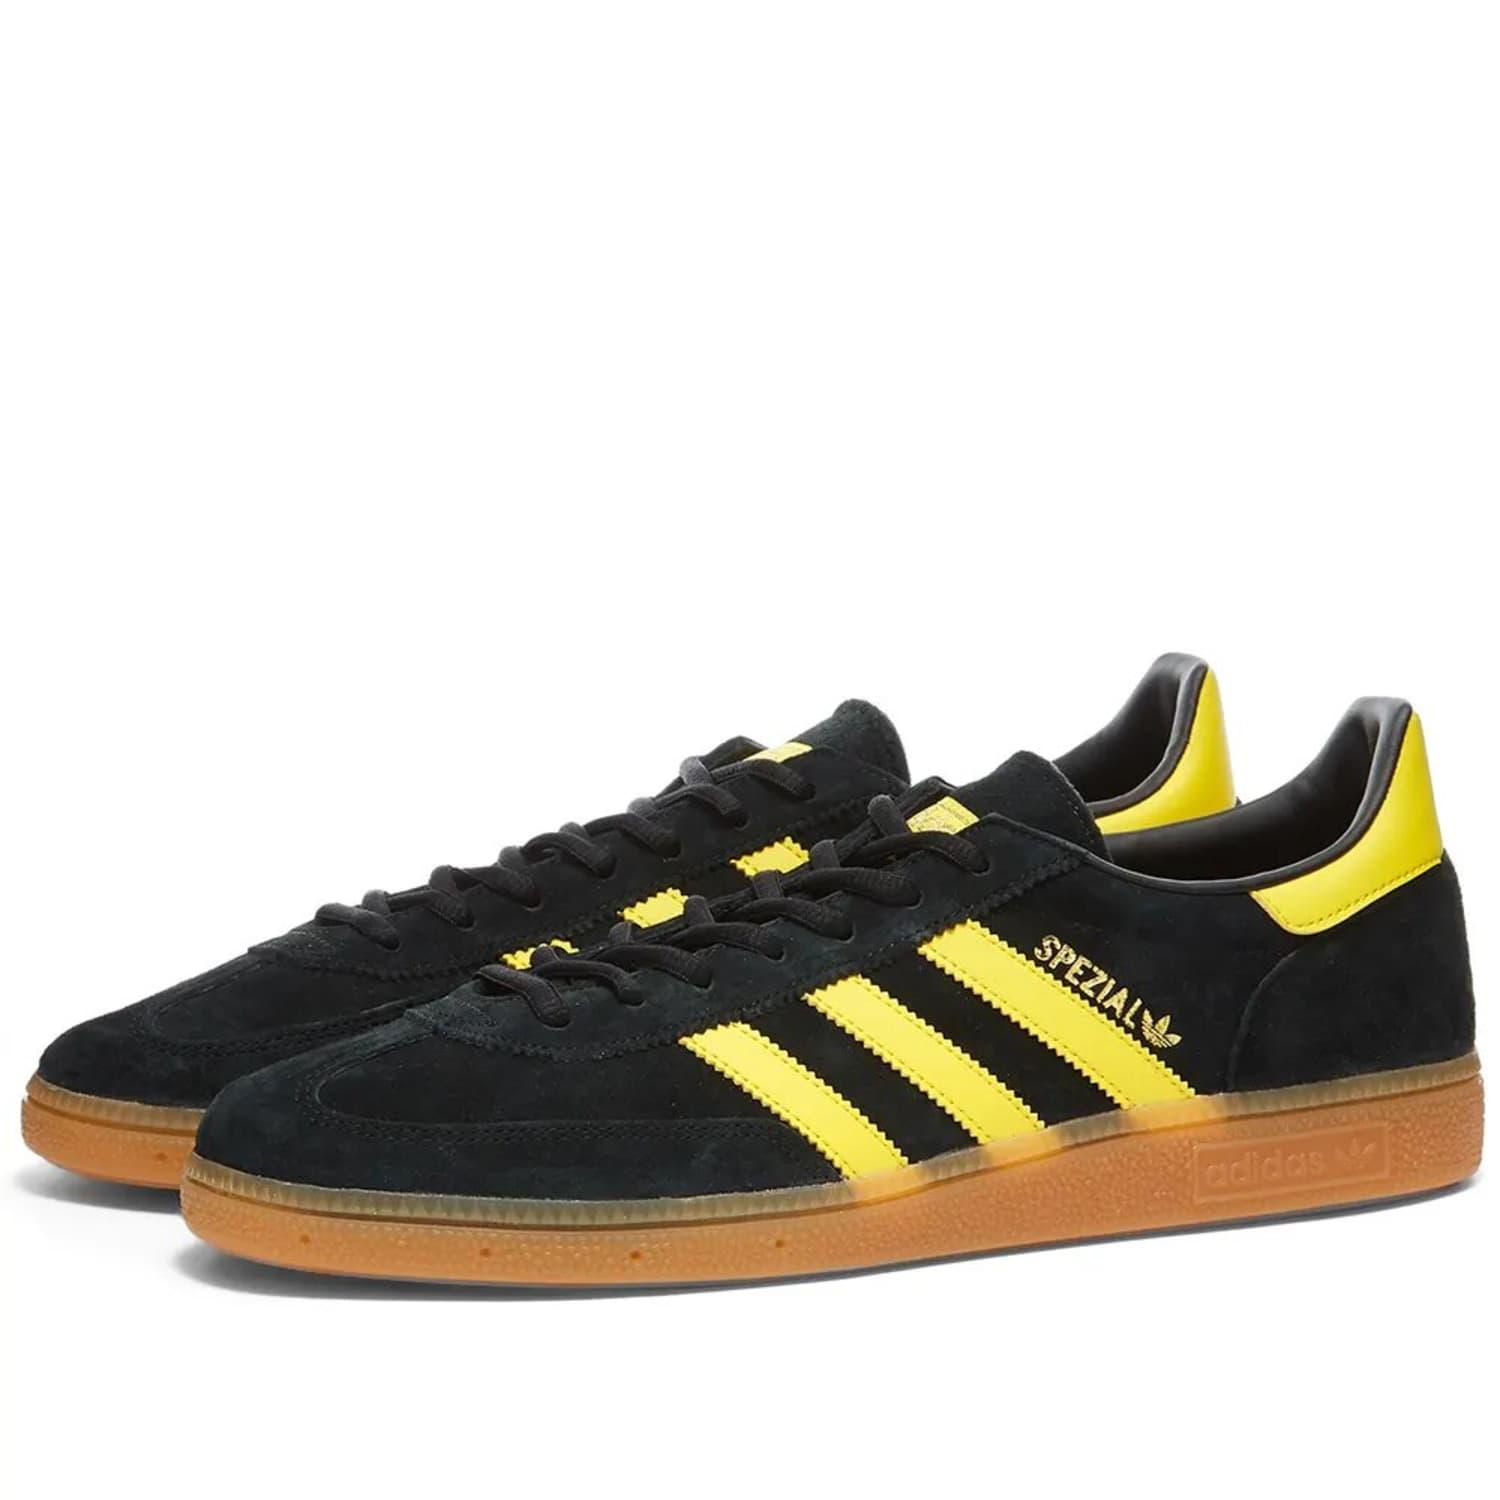 adidas Handball Spezial Black, Yellow Shoes for Men | Lyst